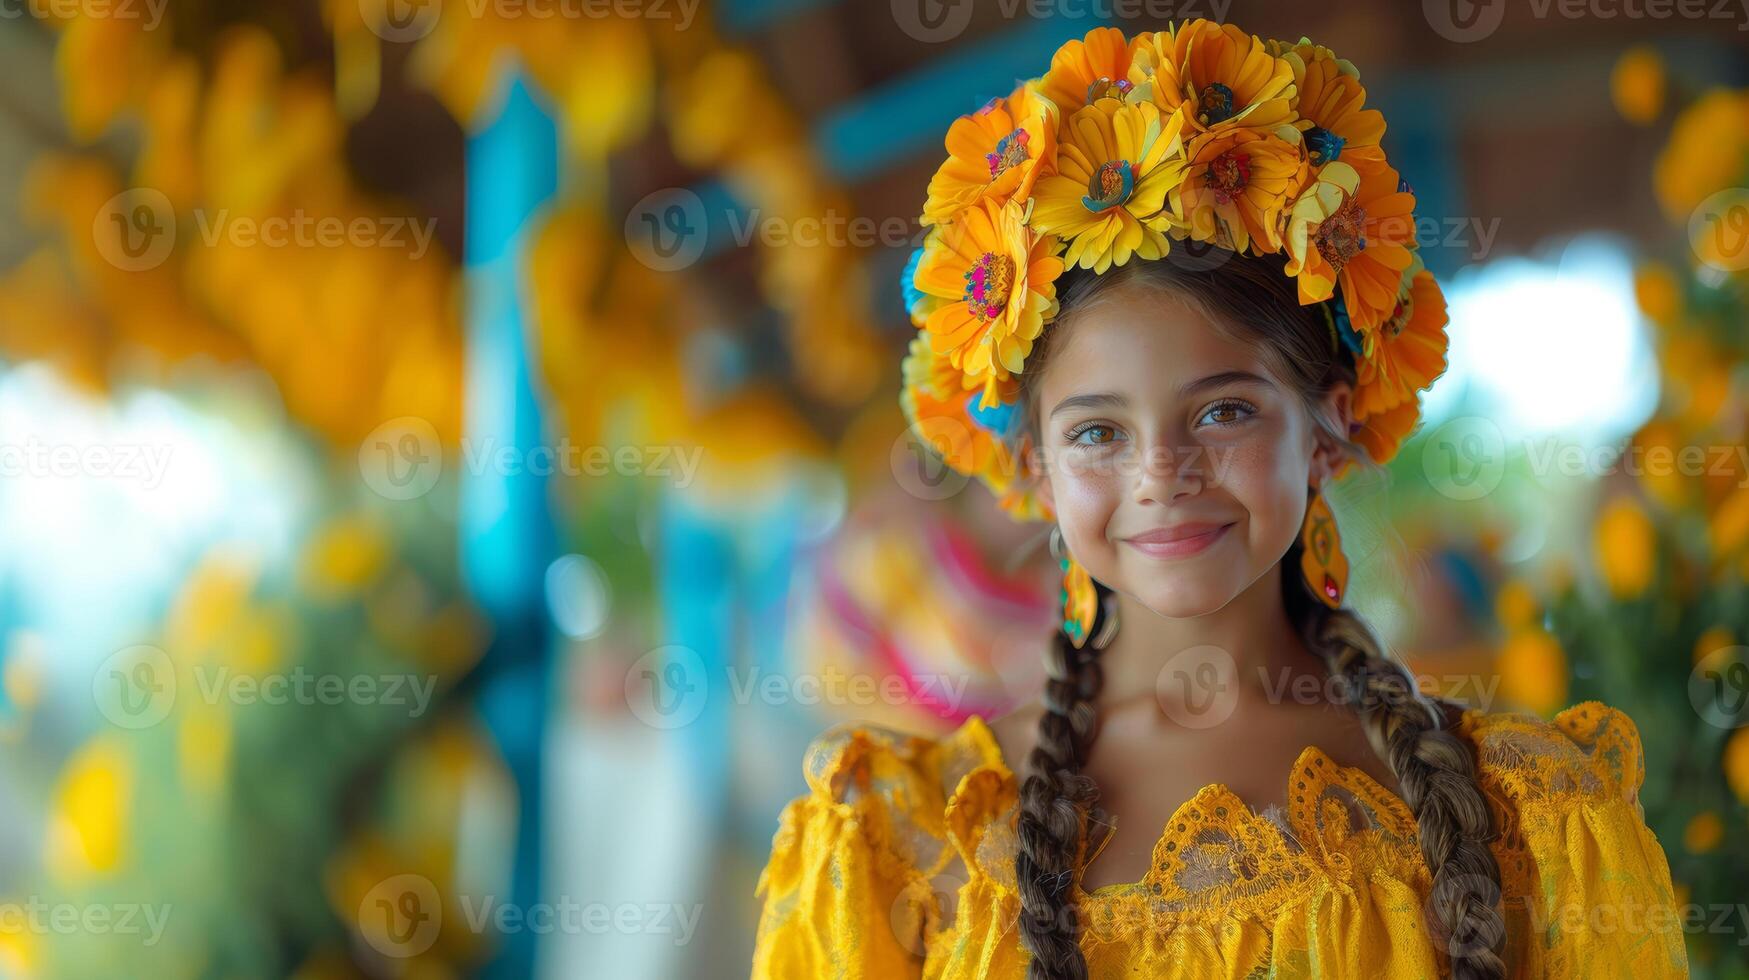 jong meisje in levendig geel jurk vieren festa Junina foto